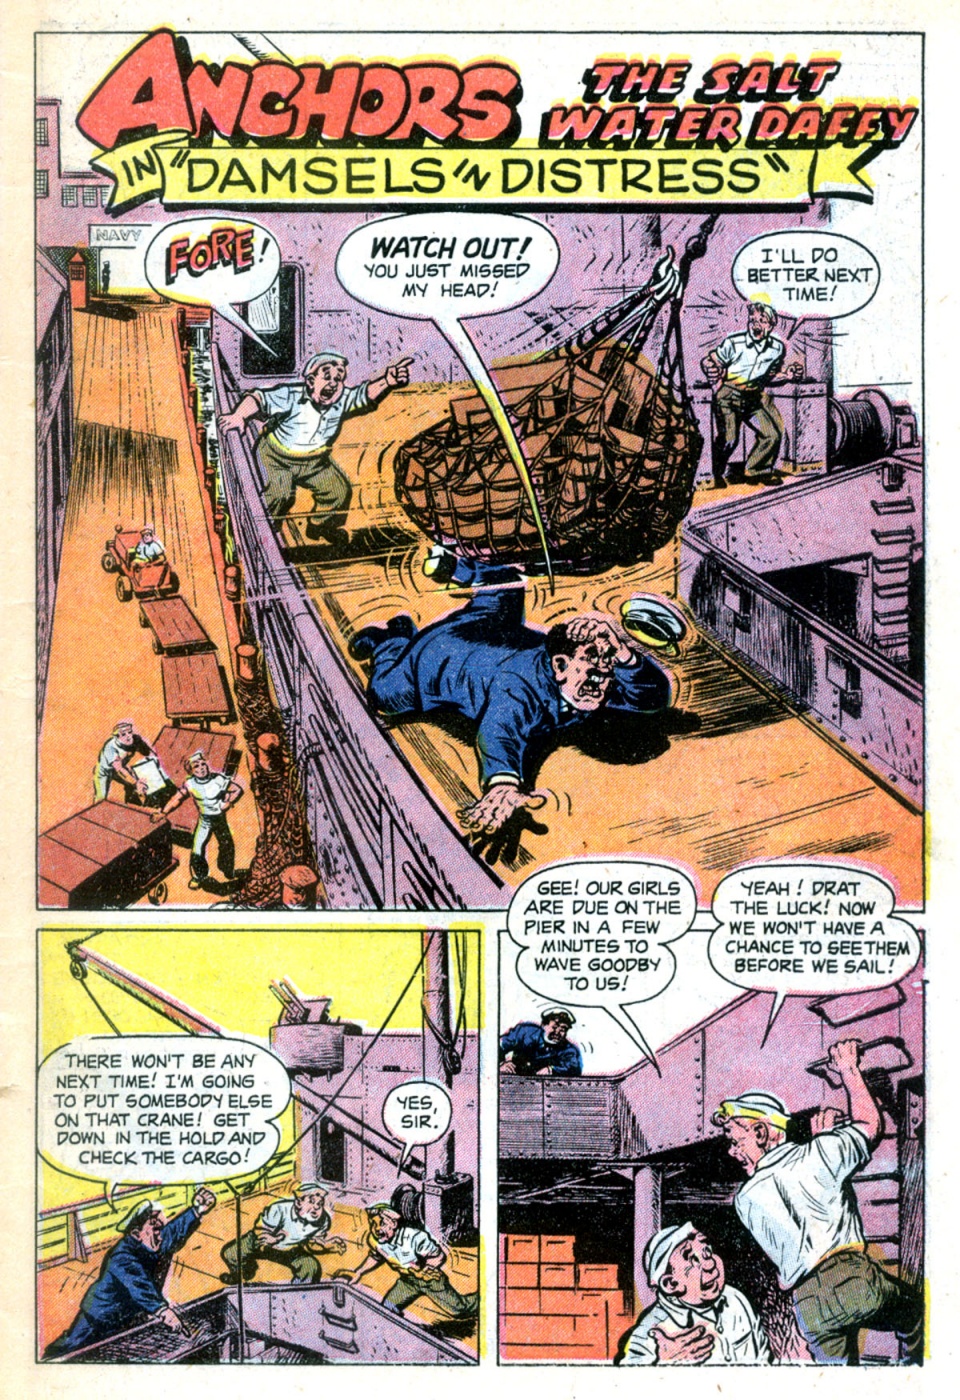 Anchors the Salt Water Daffy - Comics (3)